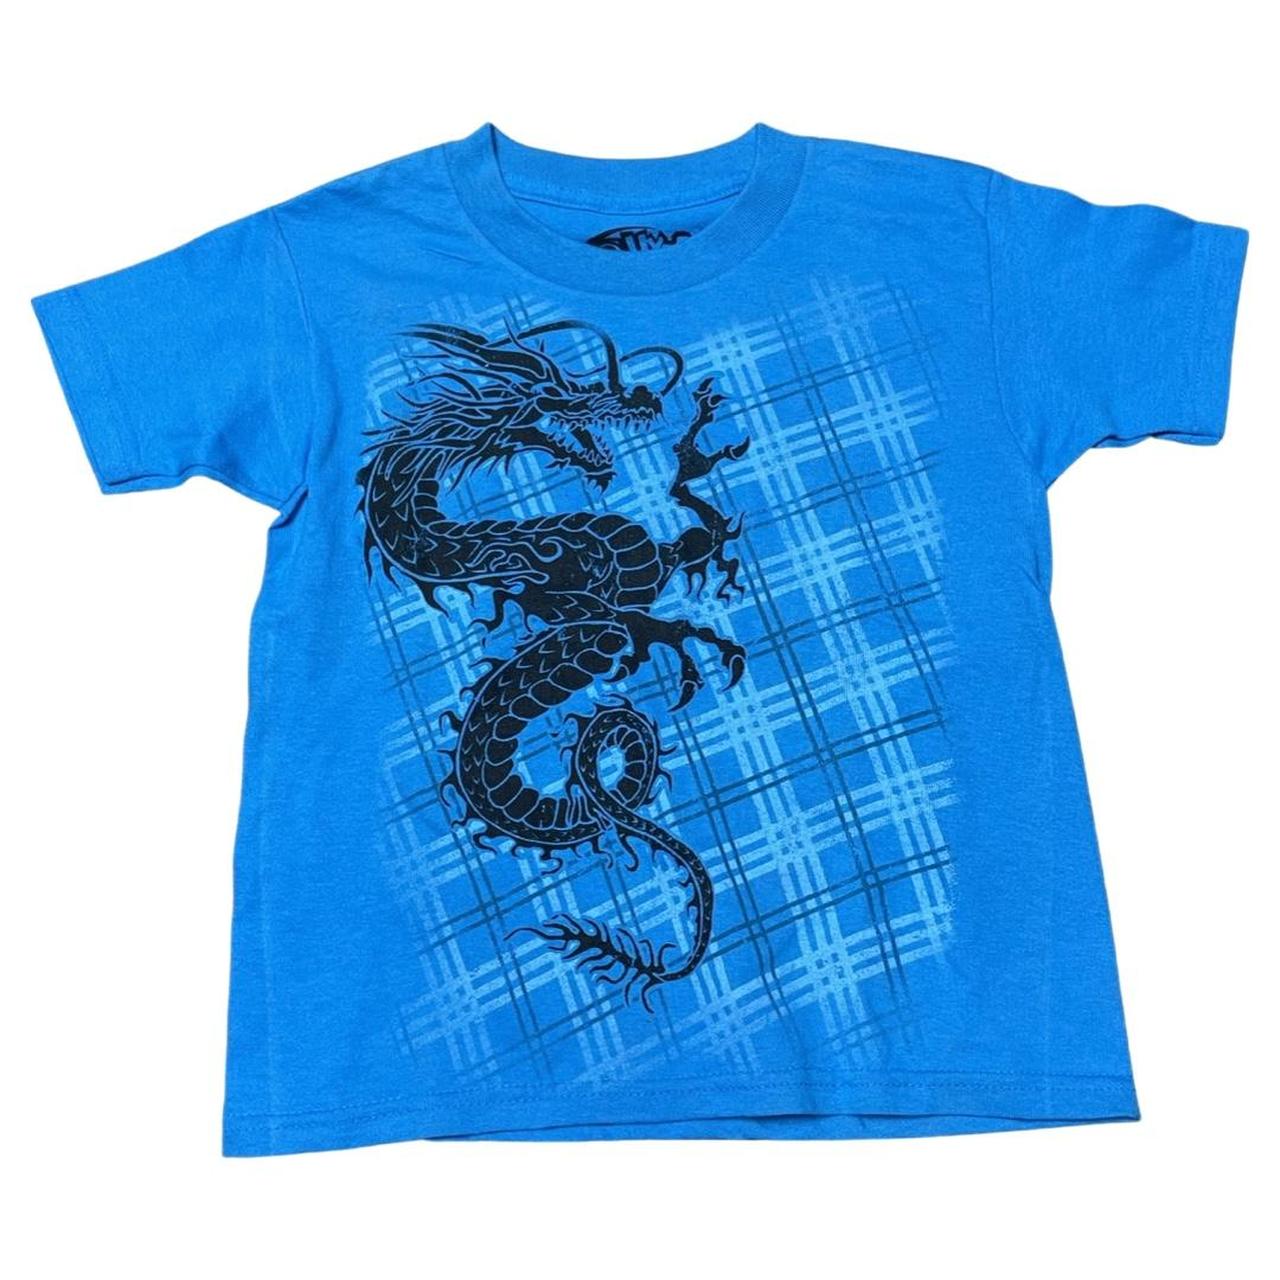 Hybrid Apparel Blue and Navy T-shirt